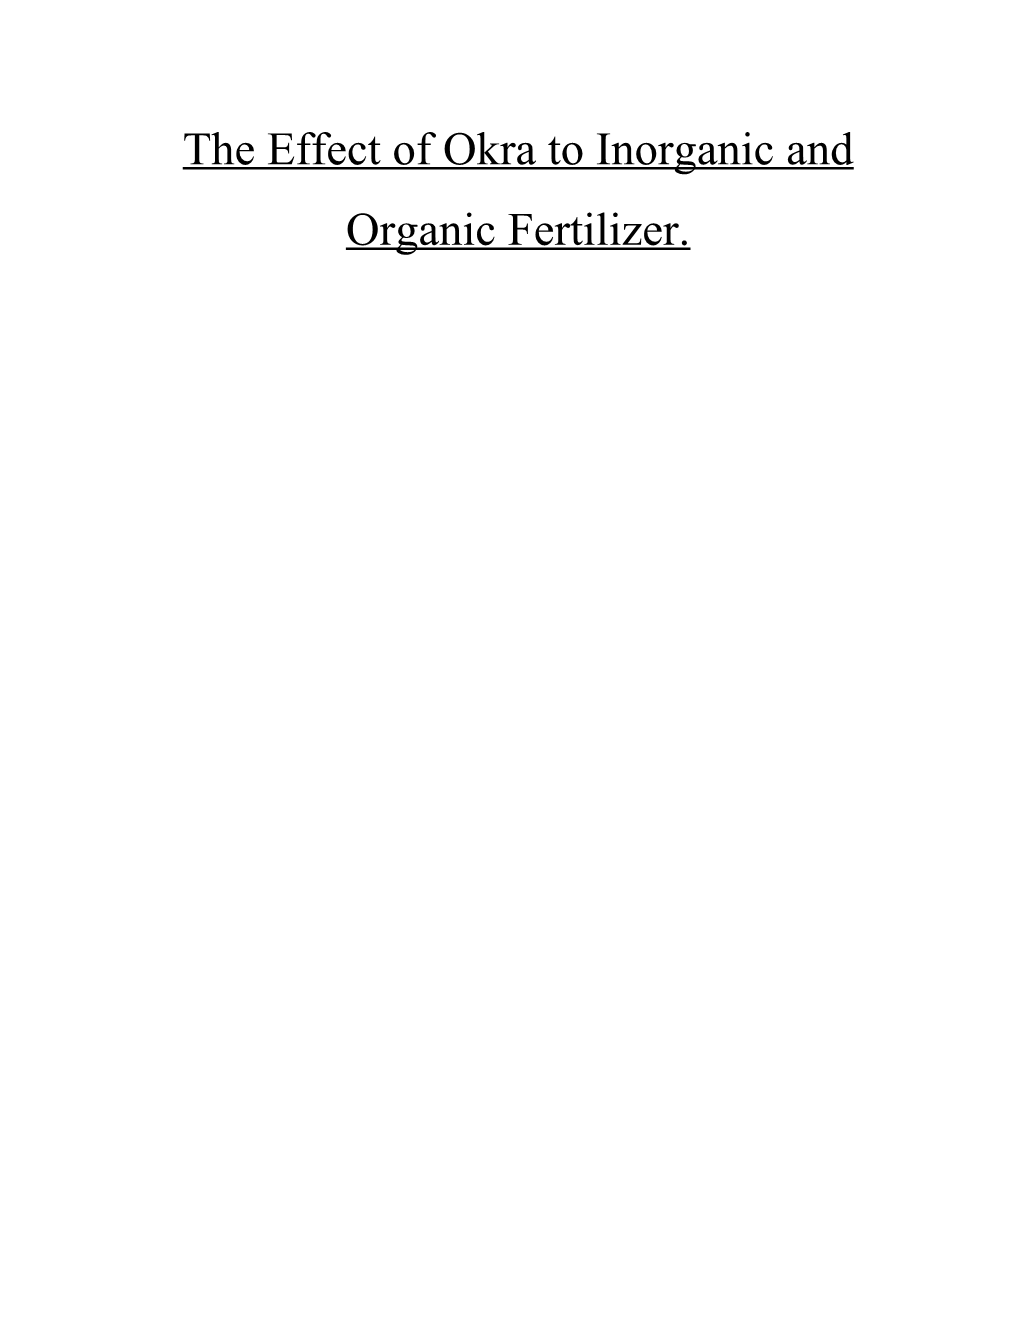 The Effect of Okra to Inorganic and Organic Fertilizer